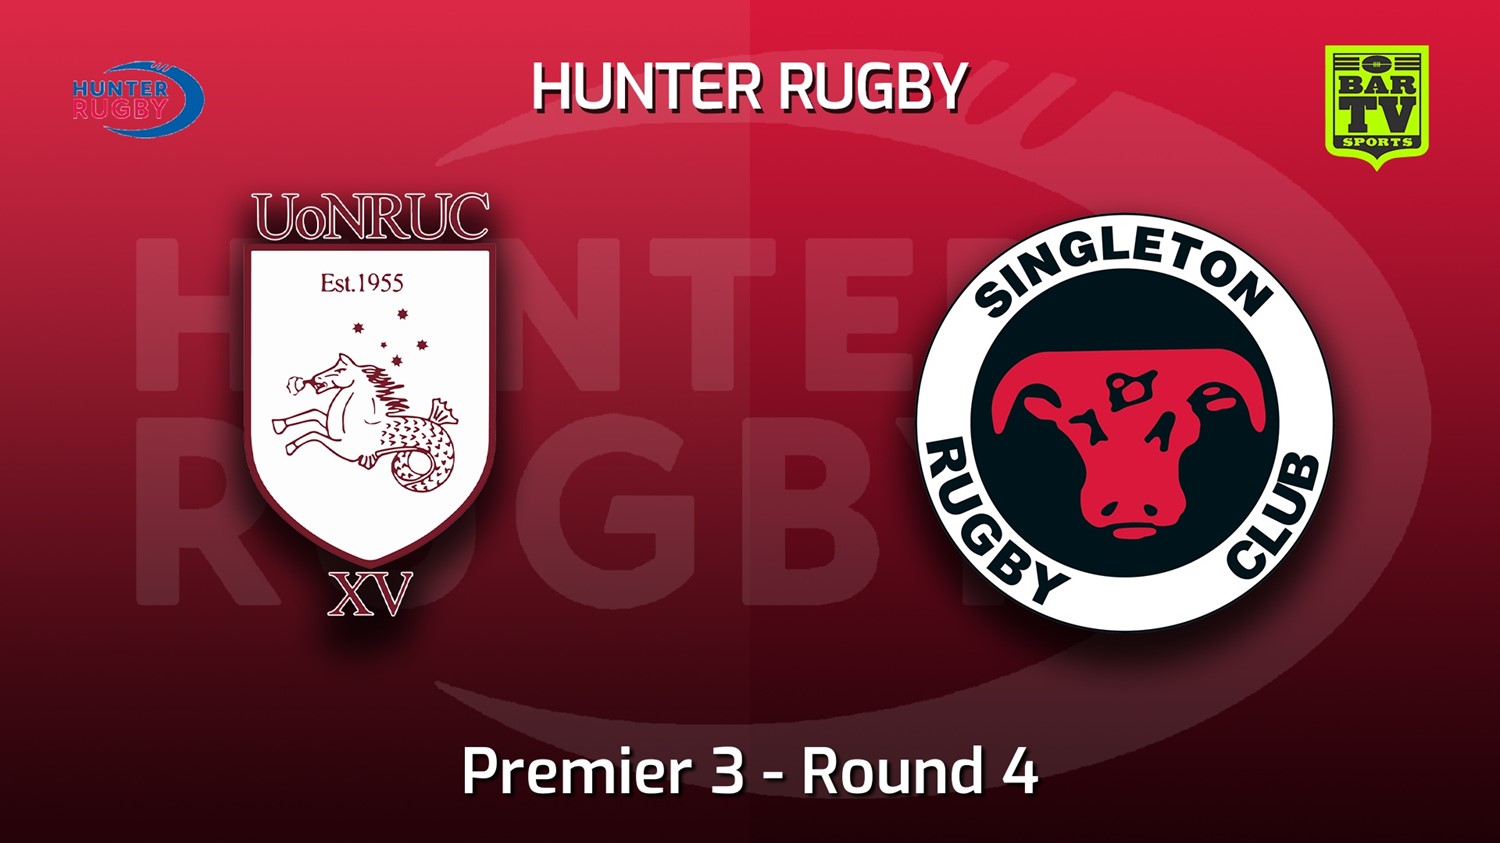 220514-Hunter Rugby Round 4 - Premier 3 - University Of Newcastle v Singleton Bulls Slate Image